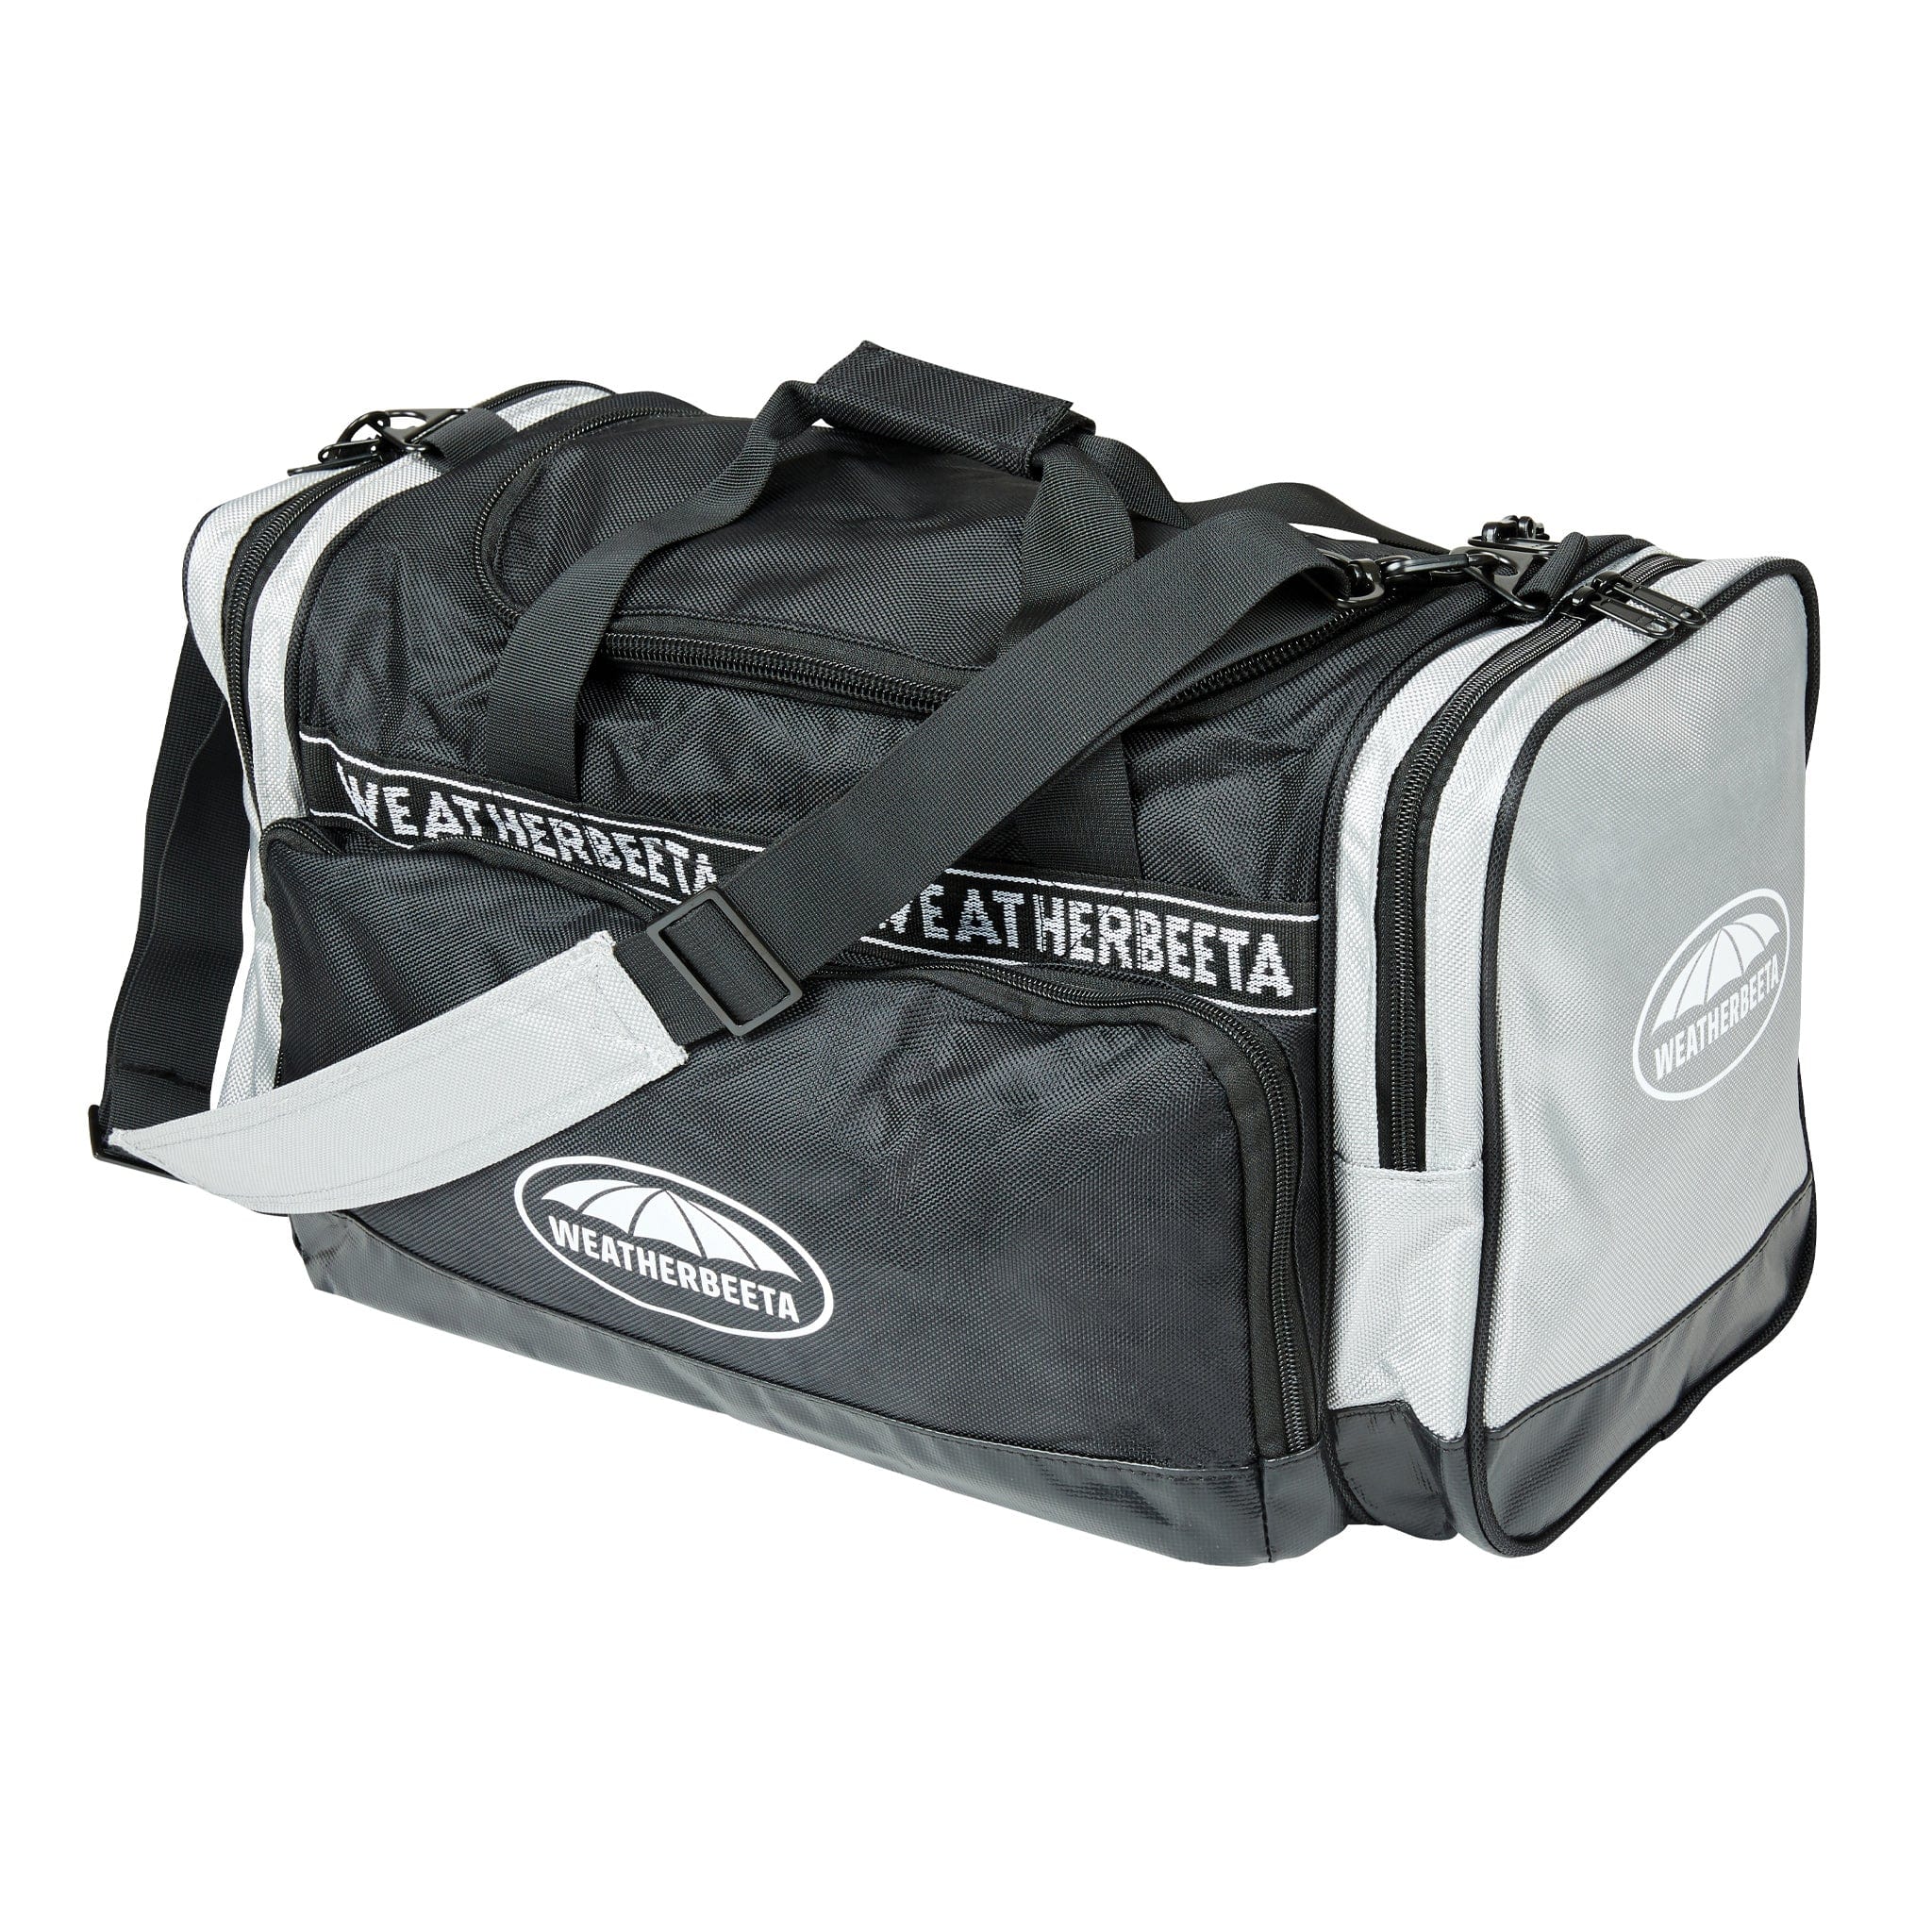 Weatherbeeta Gear Bag 1003031004 Black and Silver Large